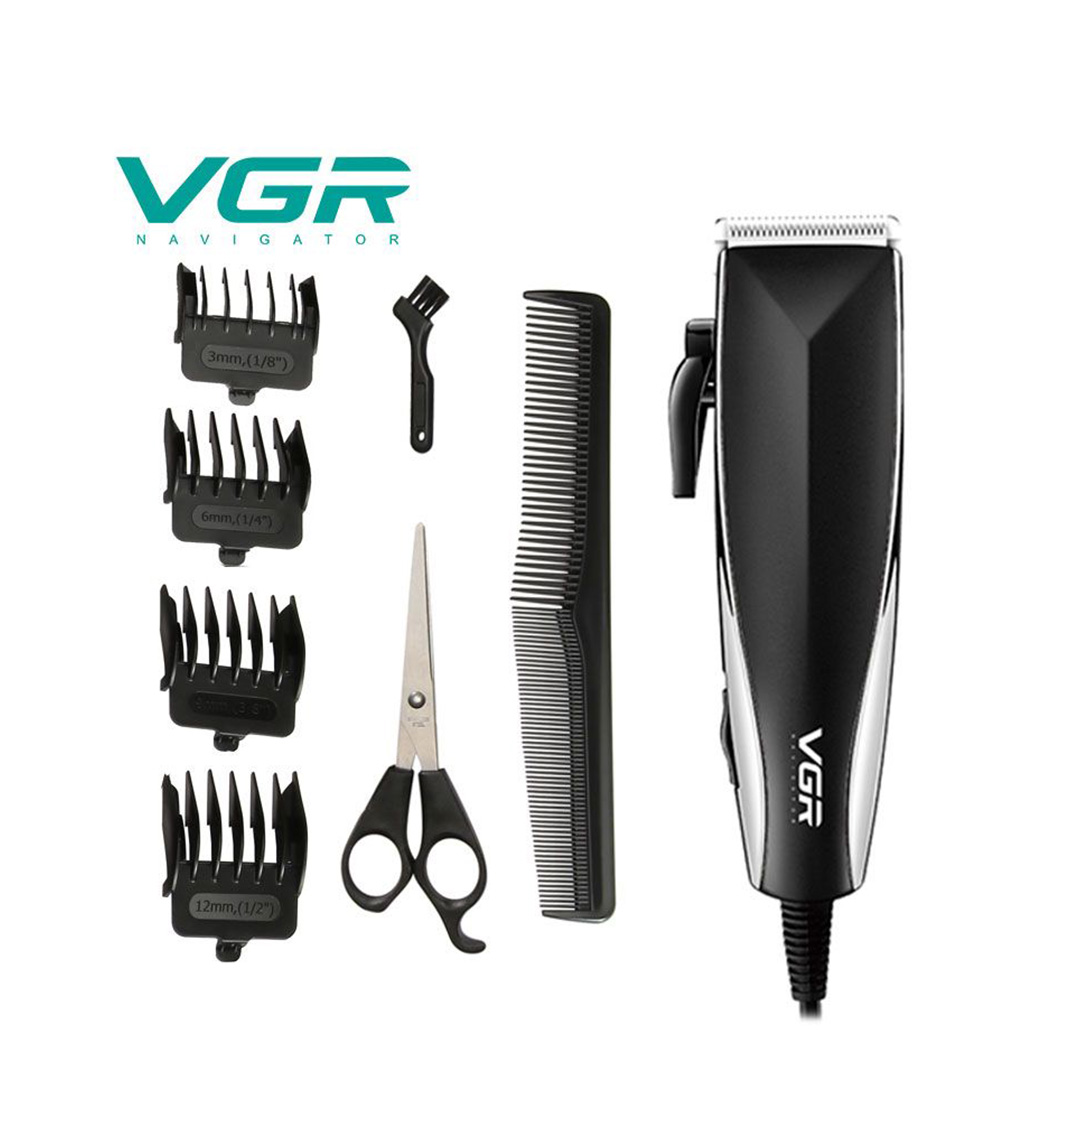 VGR V-127 Professional Rechargeable Hair Trimmer